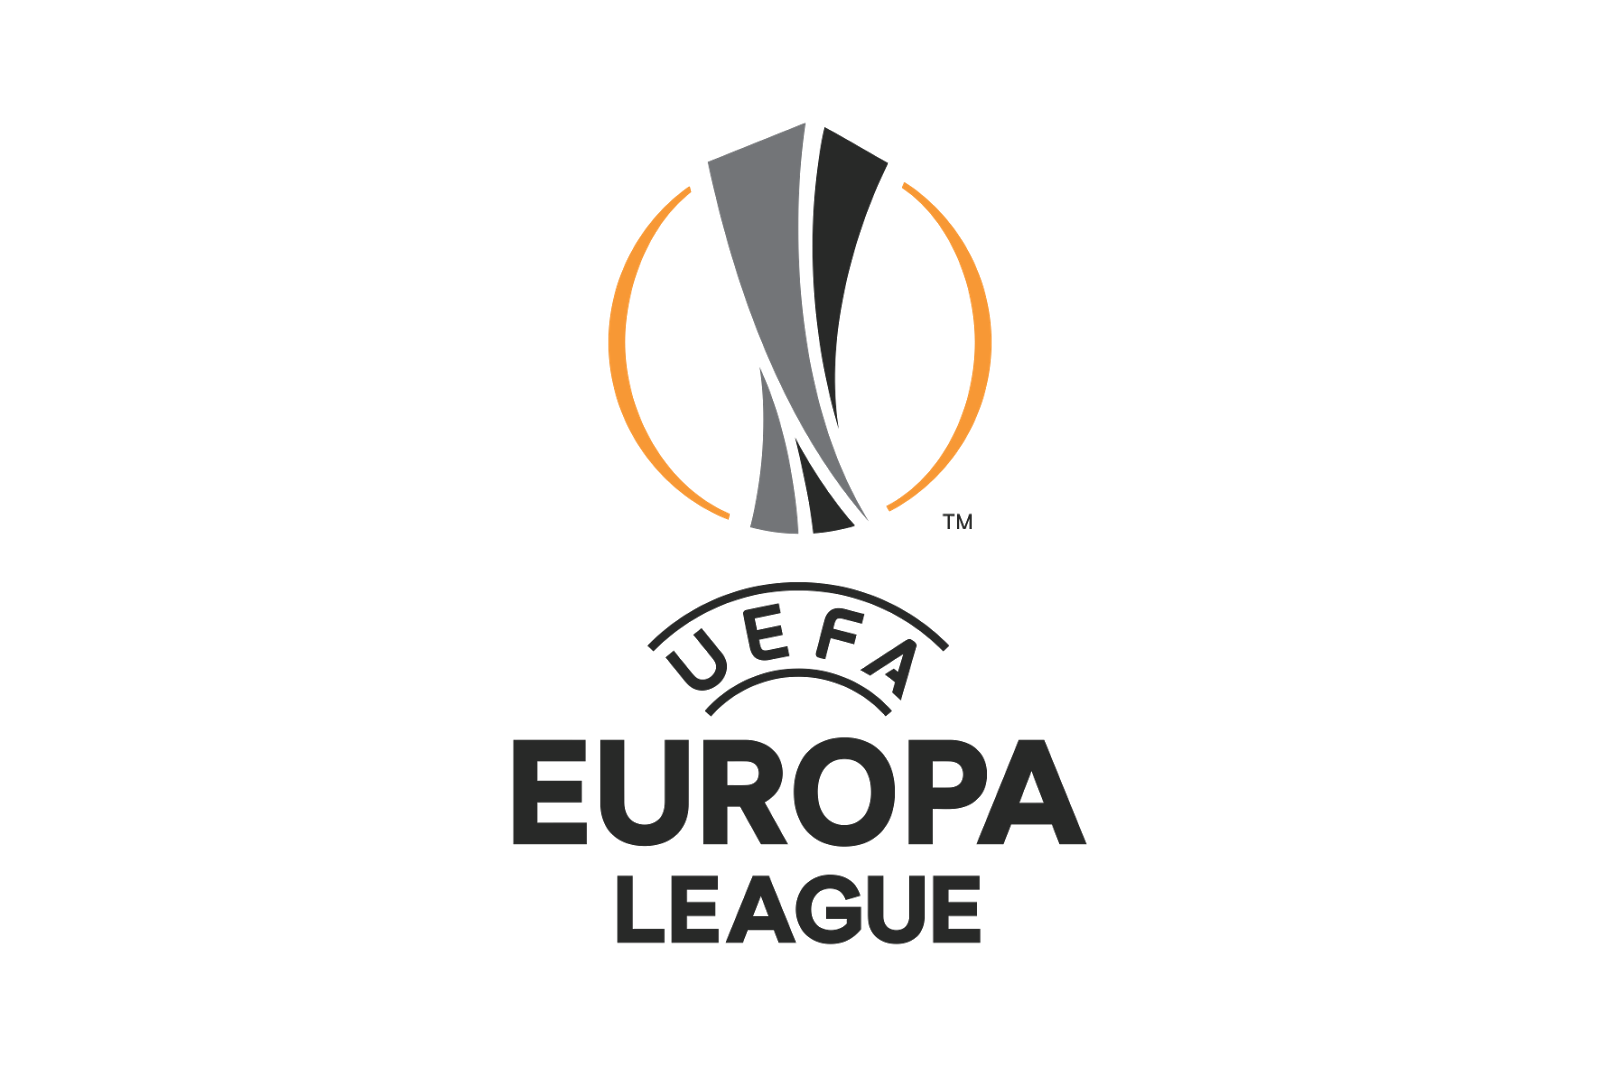 Uefa Europa Conference League Logo Png Uefa Europa League Wikipedia Images